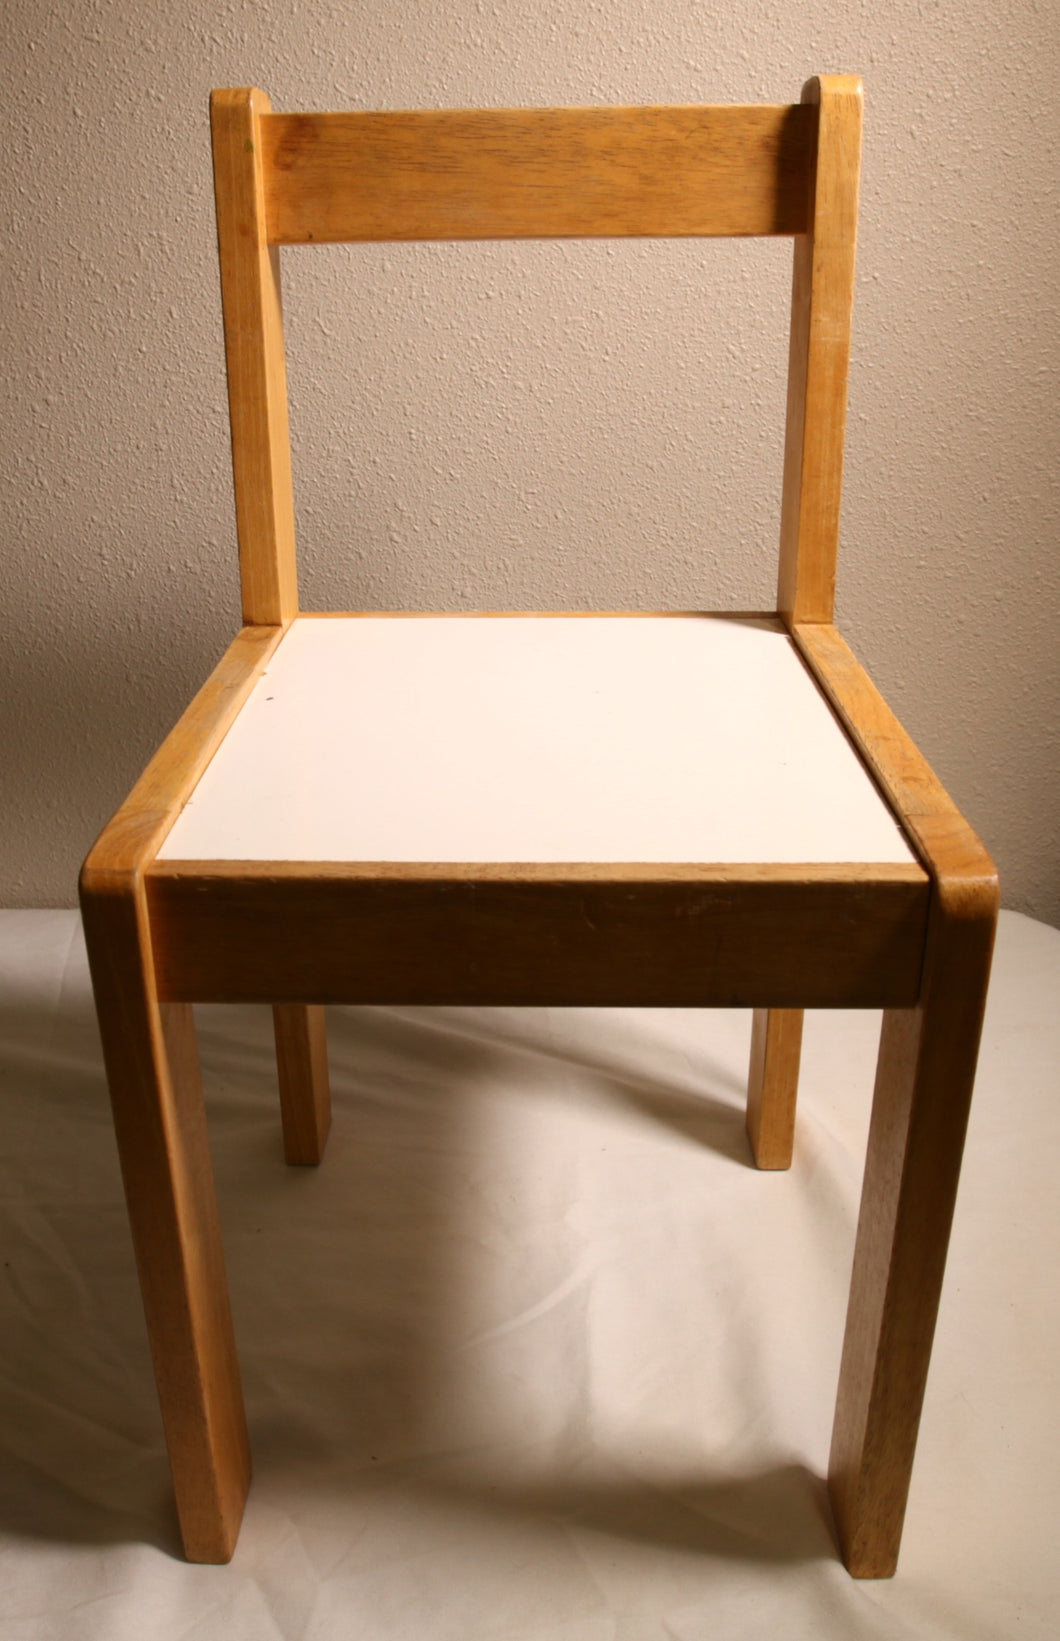 Wooden Chair #9: 11.5